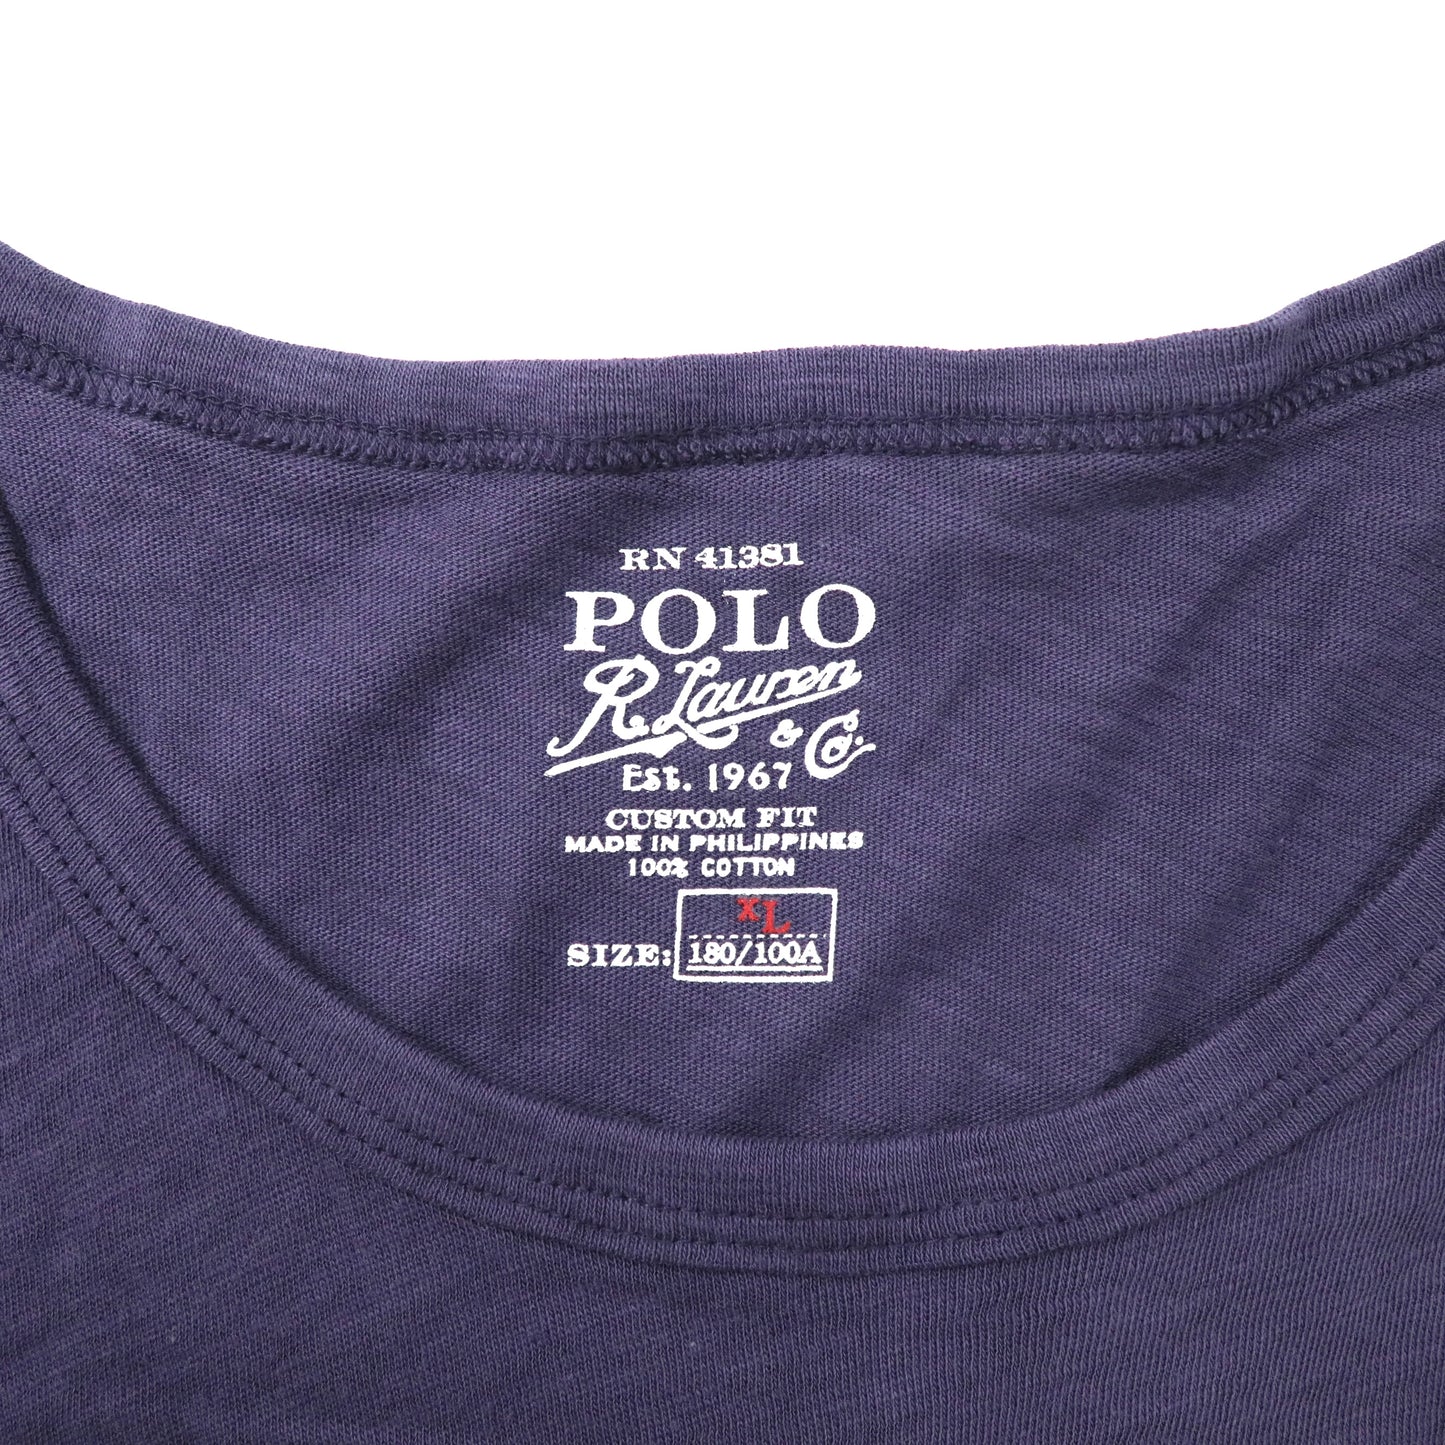 POLO RALPH LAUREN ビッグサイズ ロゴプリントTシャツ XL ネイビー コットン U.S.R.L. DM-42 未使用品